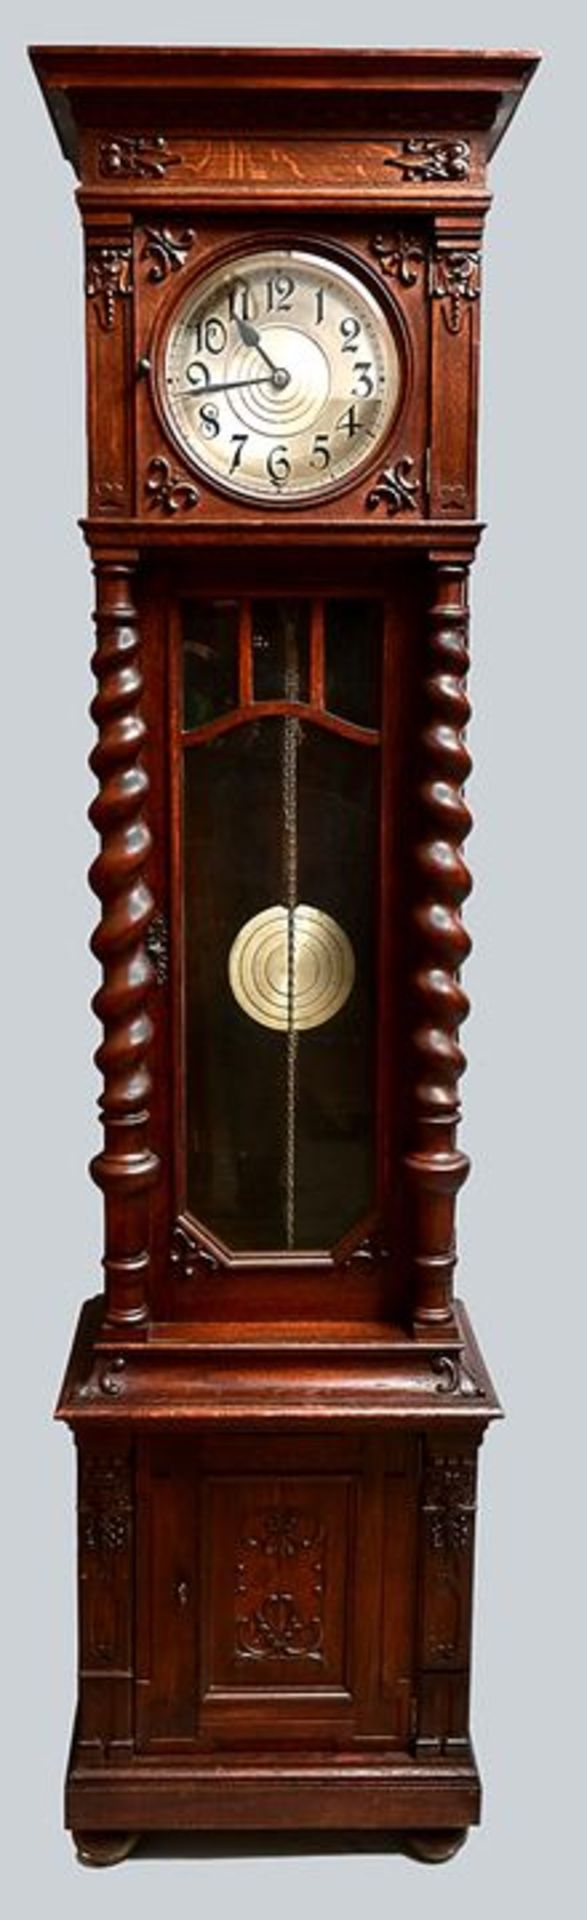 Standuhr / Grandfather clock